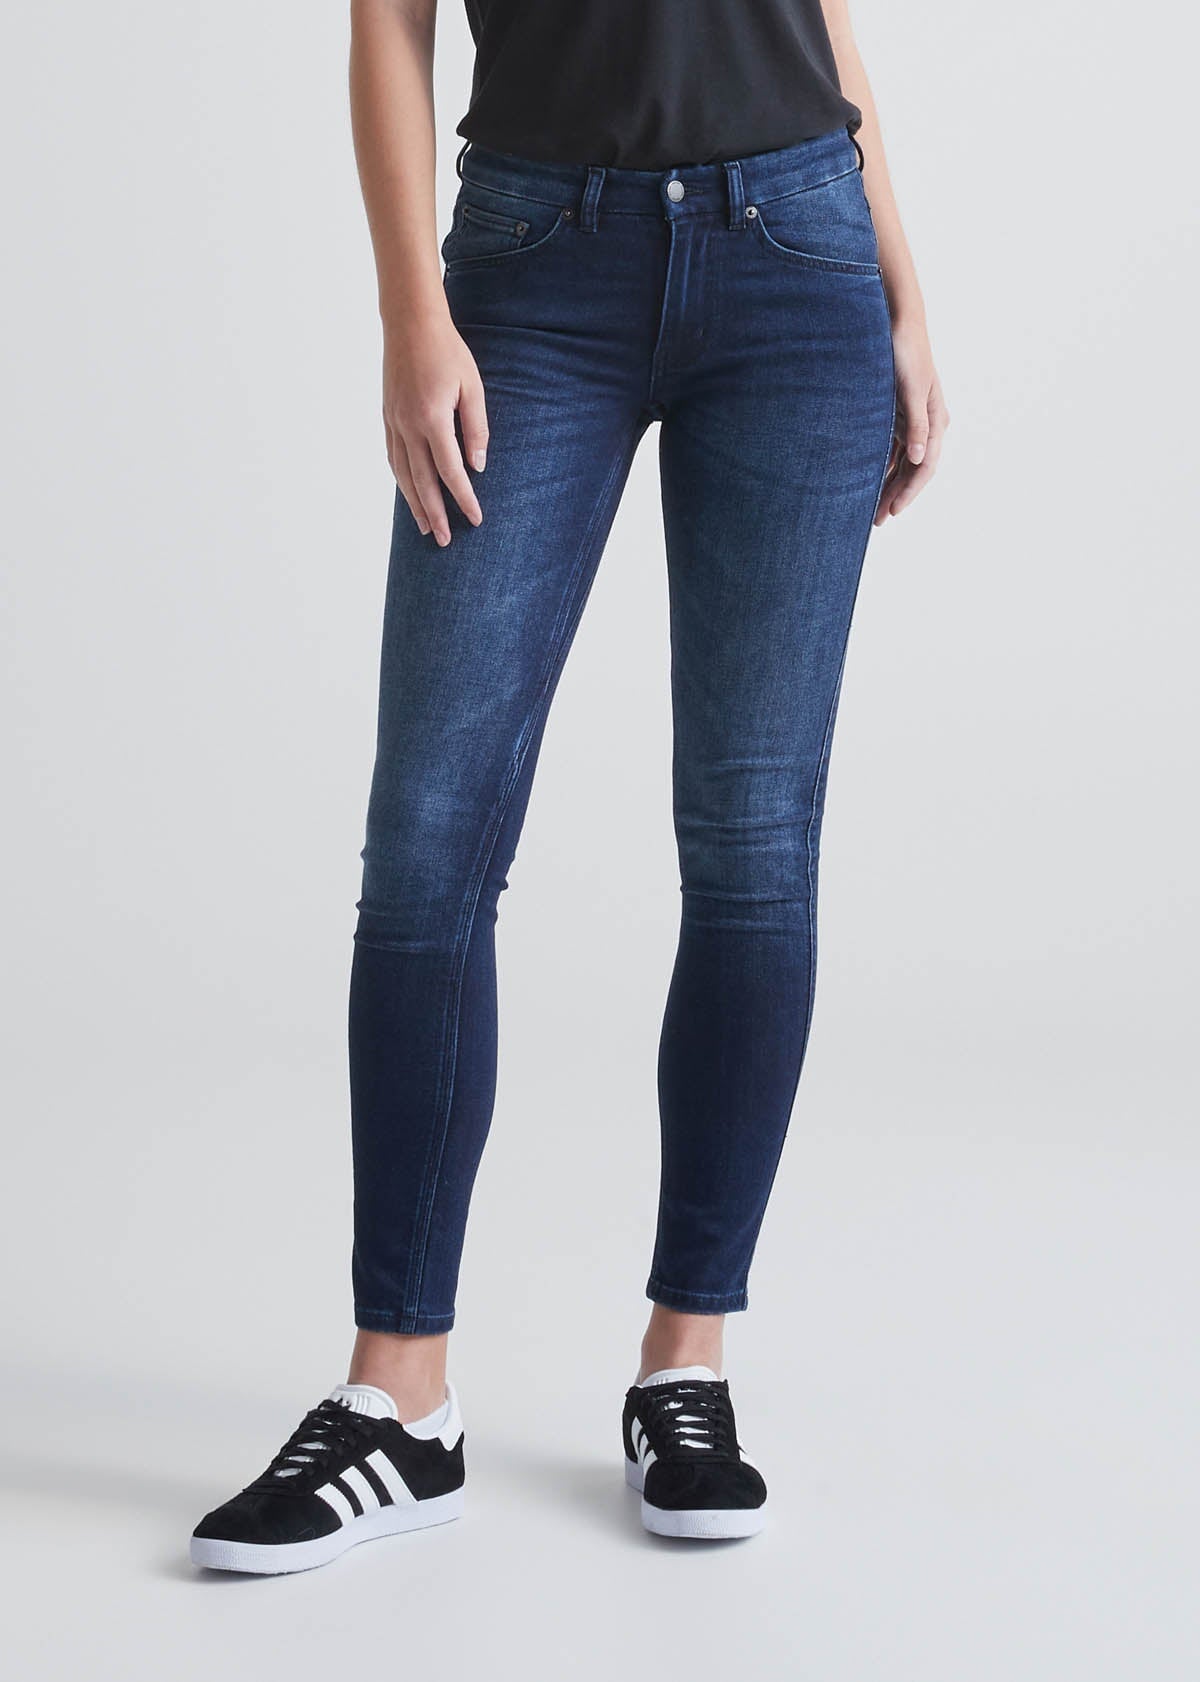 CURVE APPEAL Tummy Tucking High Rise Comfort Waist Skinny Jeans |  Nordstromrack